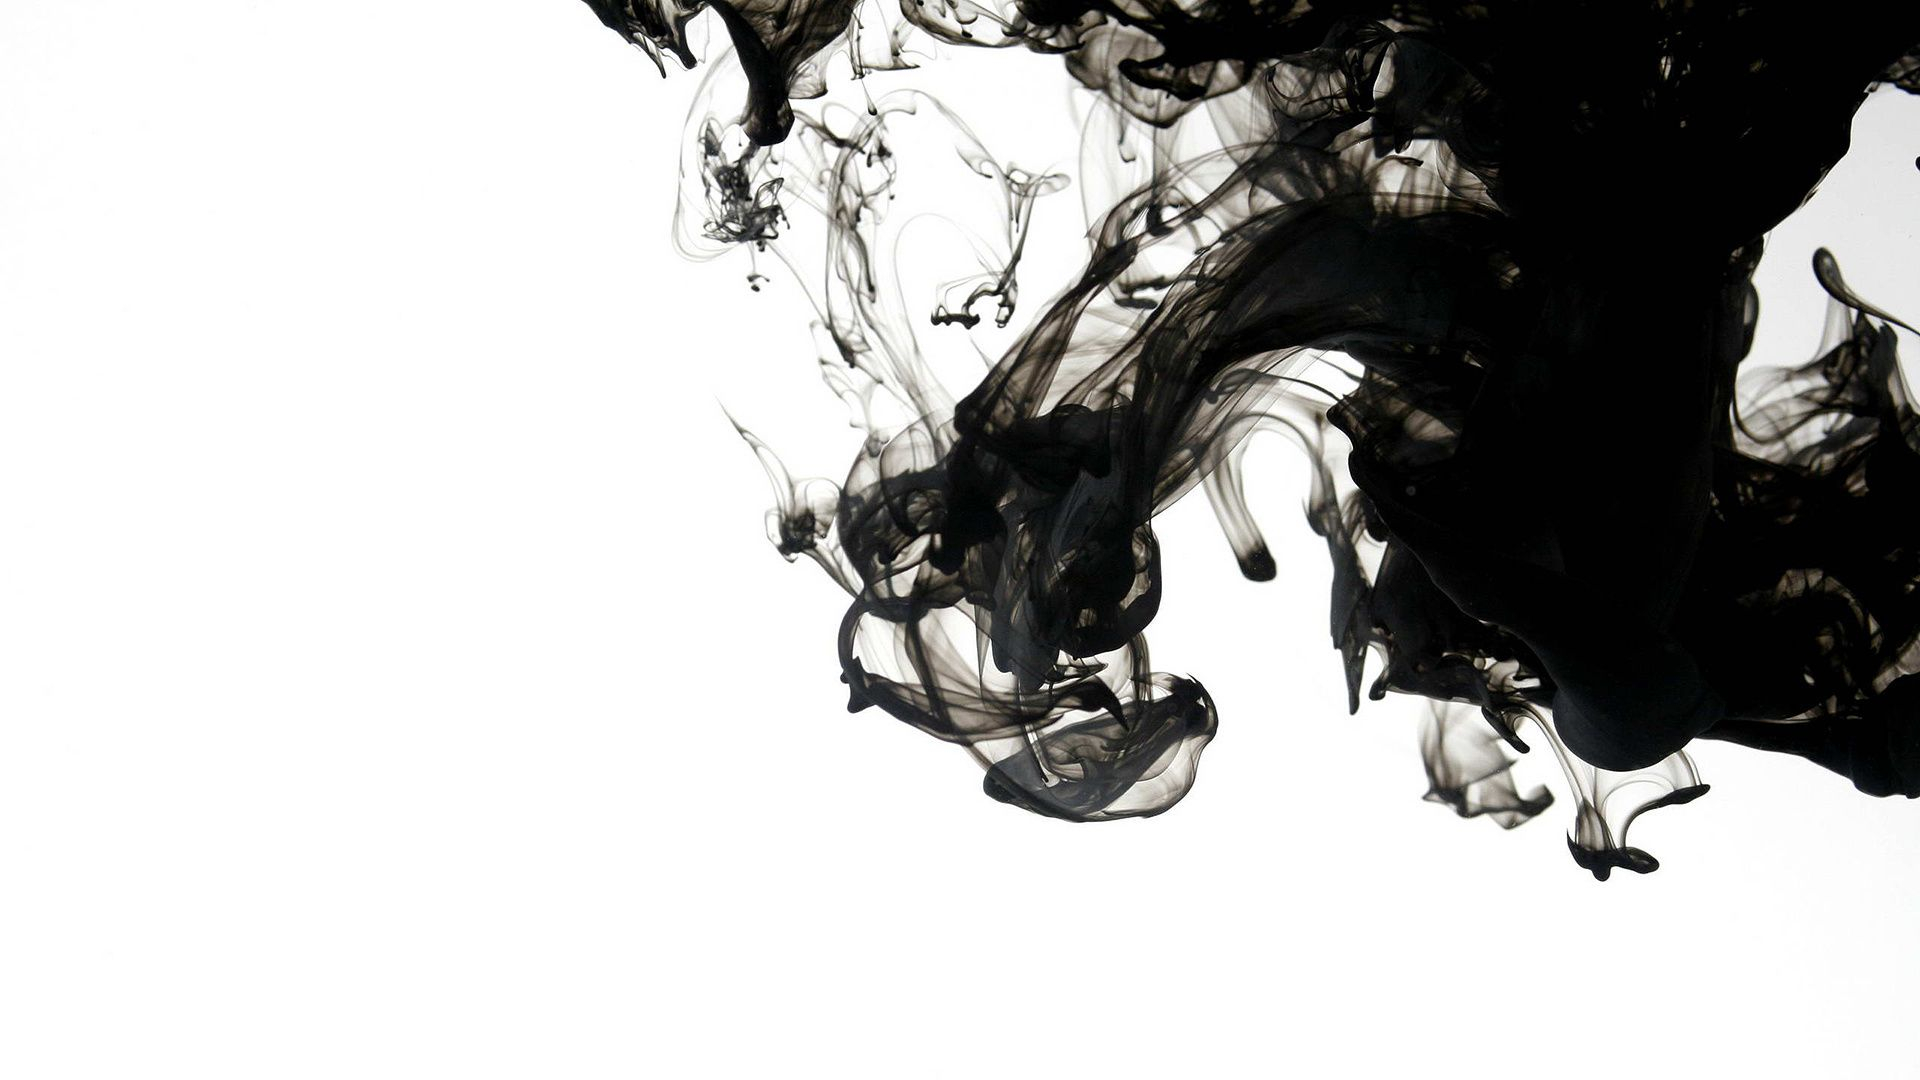 1920x1080 Black Smoke Wallpaper Images. | Smoke art, Black smoke, Smoke wallpaper